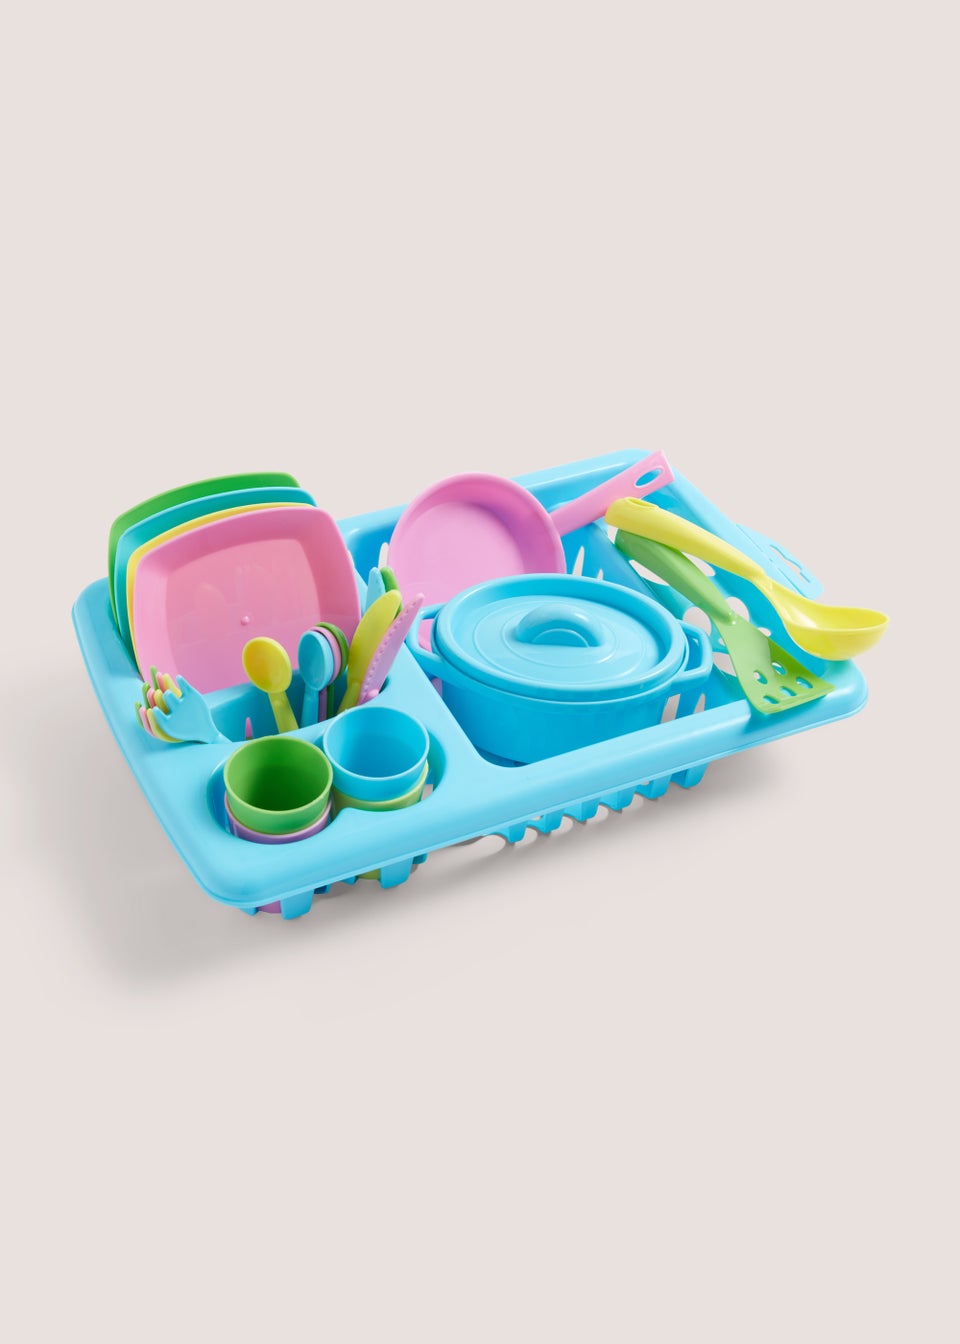 Kids Dish & Cutlery Set (31.5cm x 20cm x 9cm)